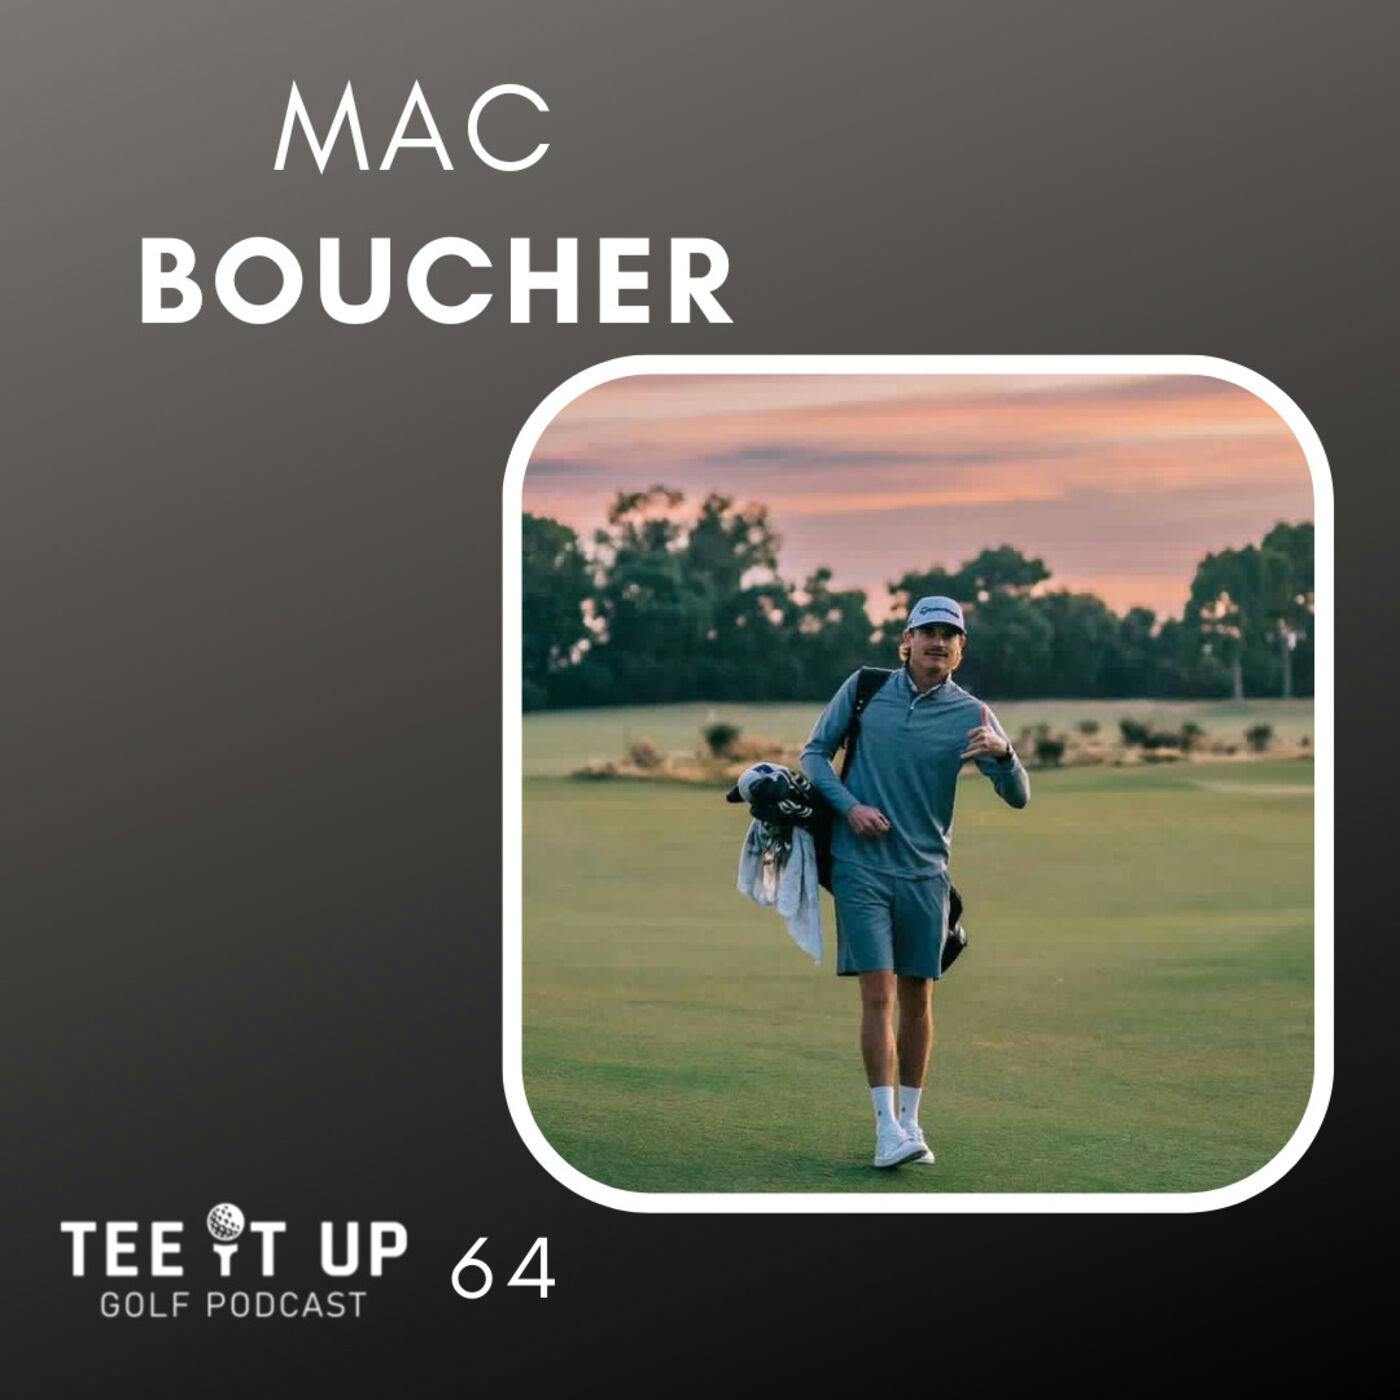 Mac Boucher - The King Of Sling